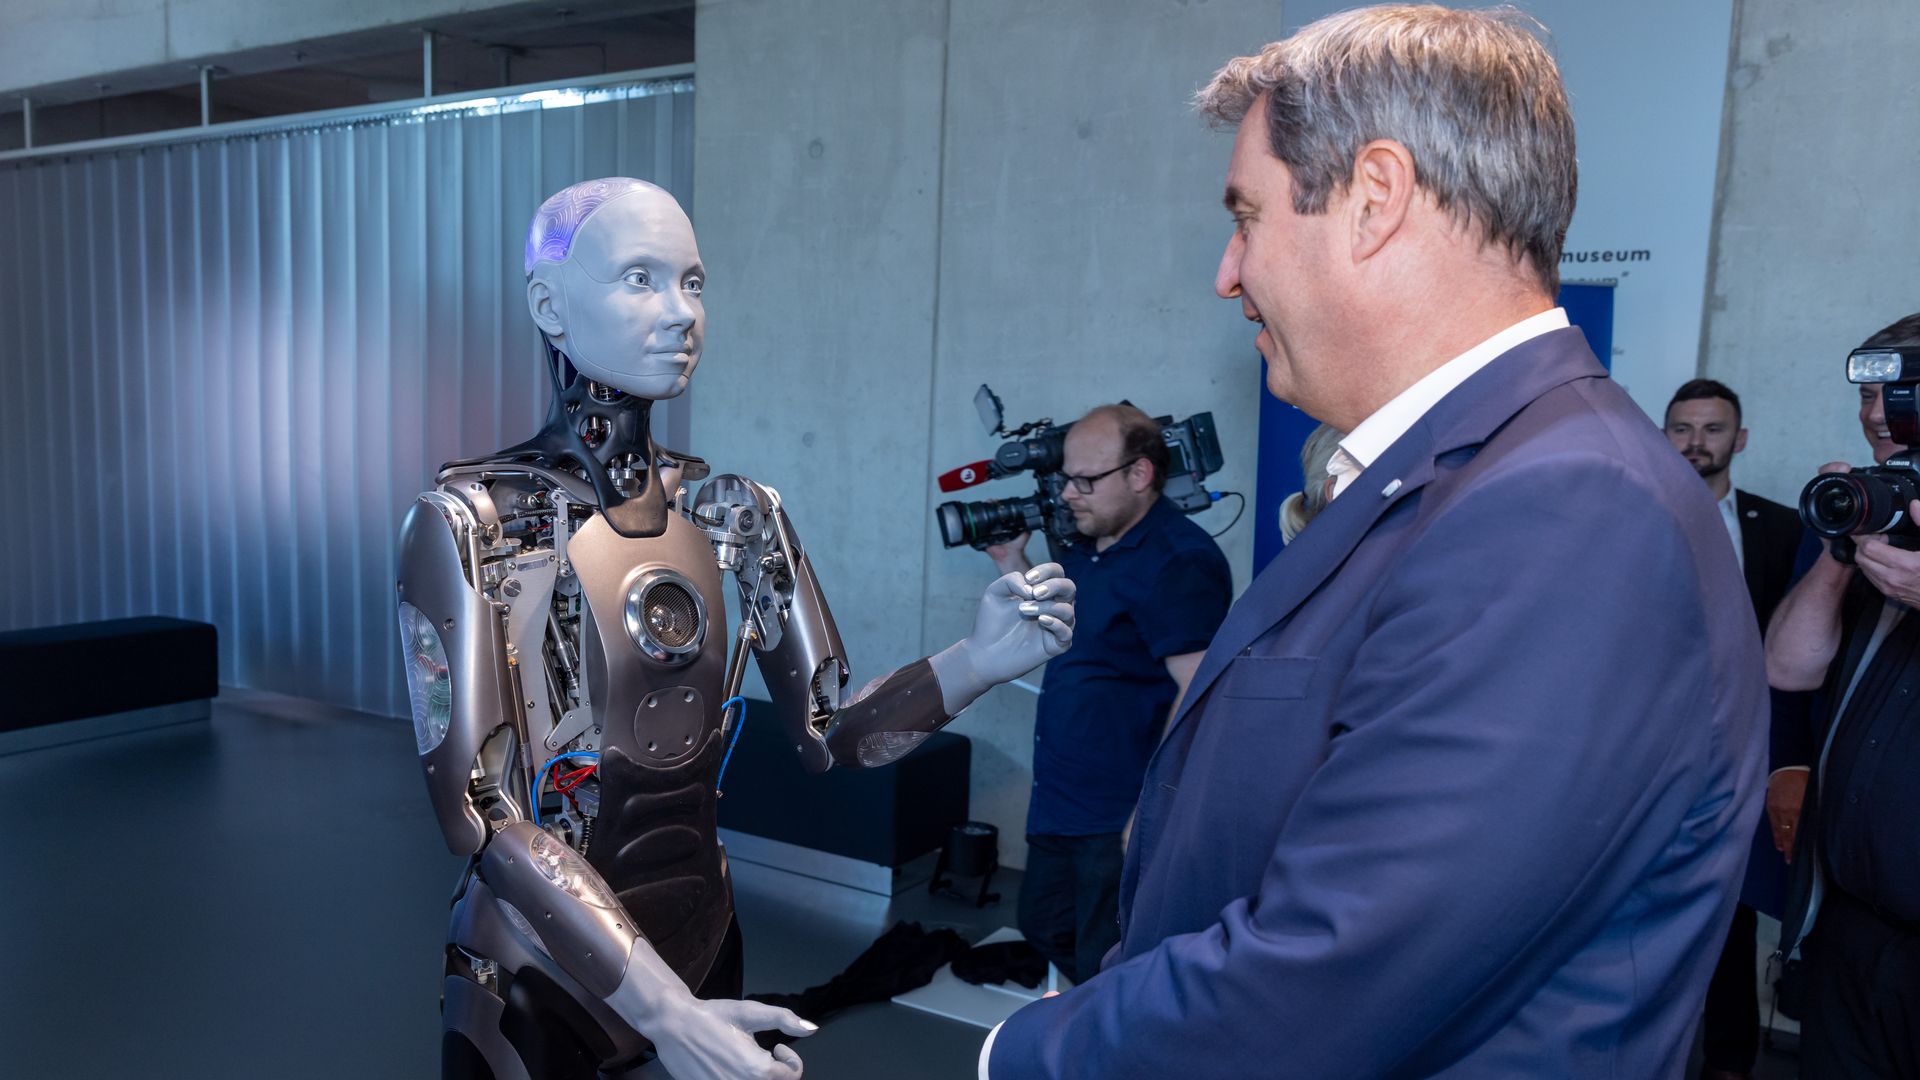 Ameca, a humsnoid robot, greets a Bavarian official.